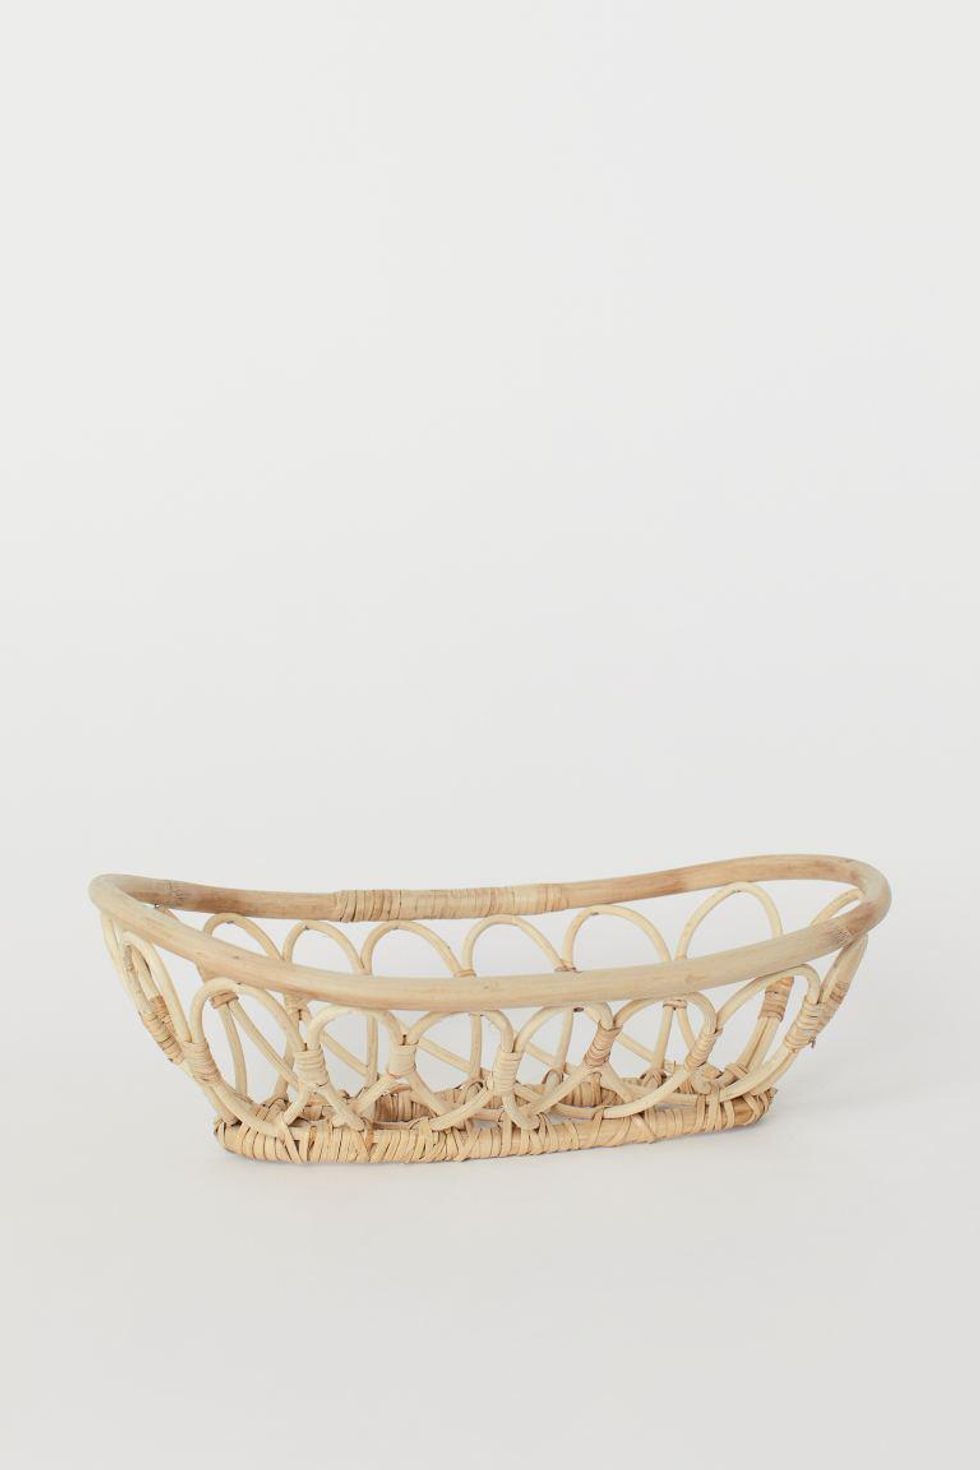 Rattan Fruit Basket Wicker Furniture